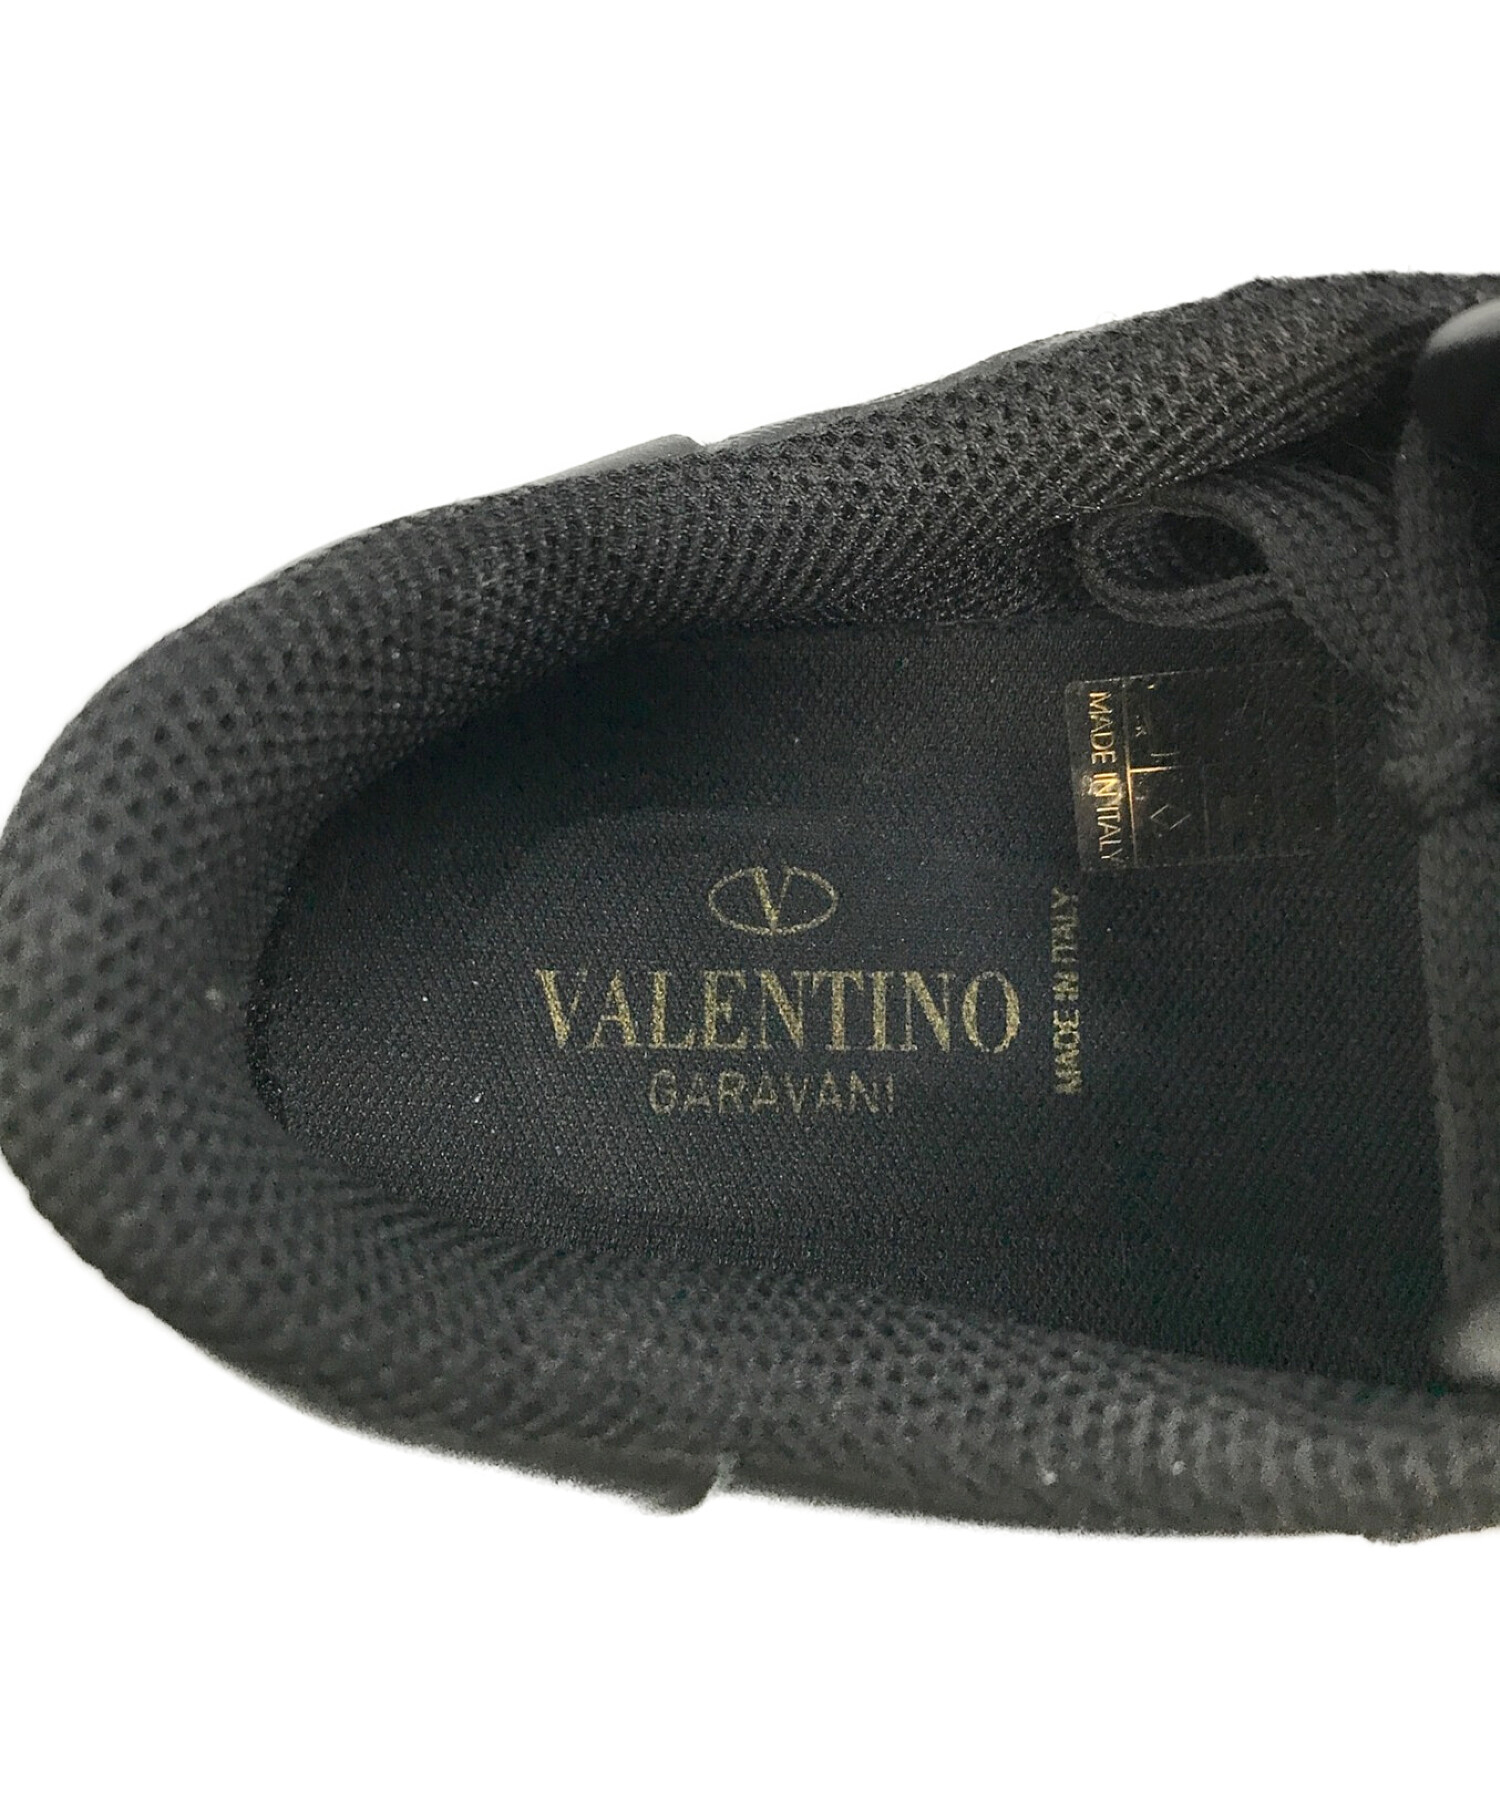 Valetino made in itally サイズアウト - ニット/セーター